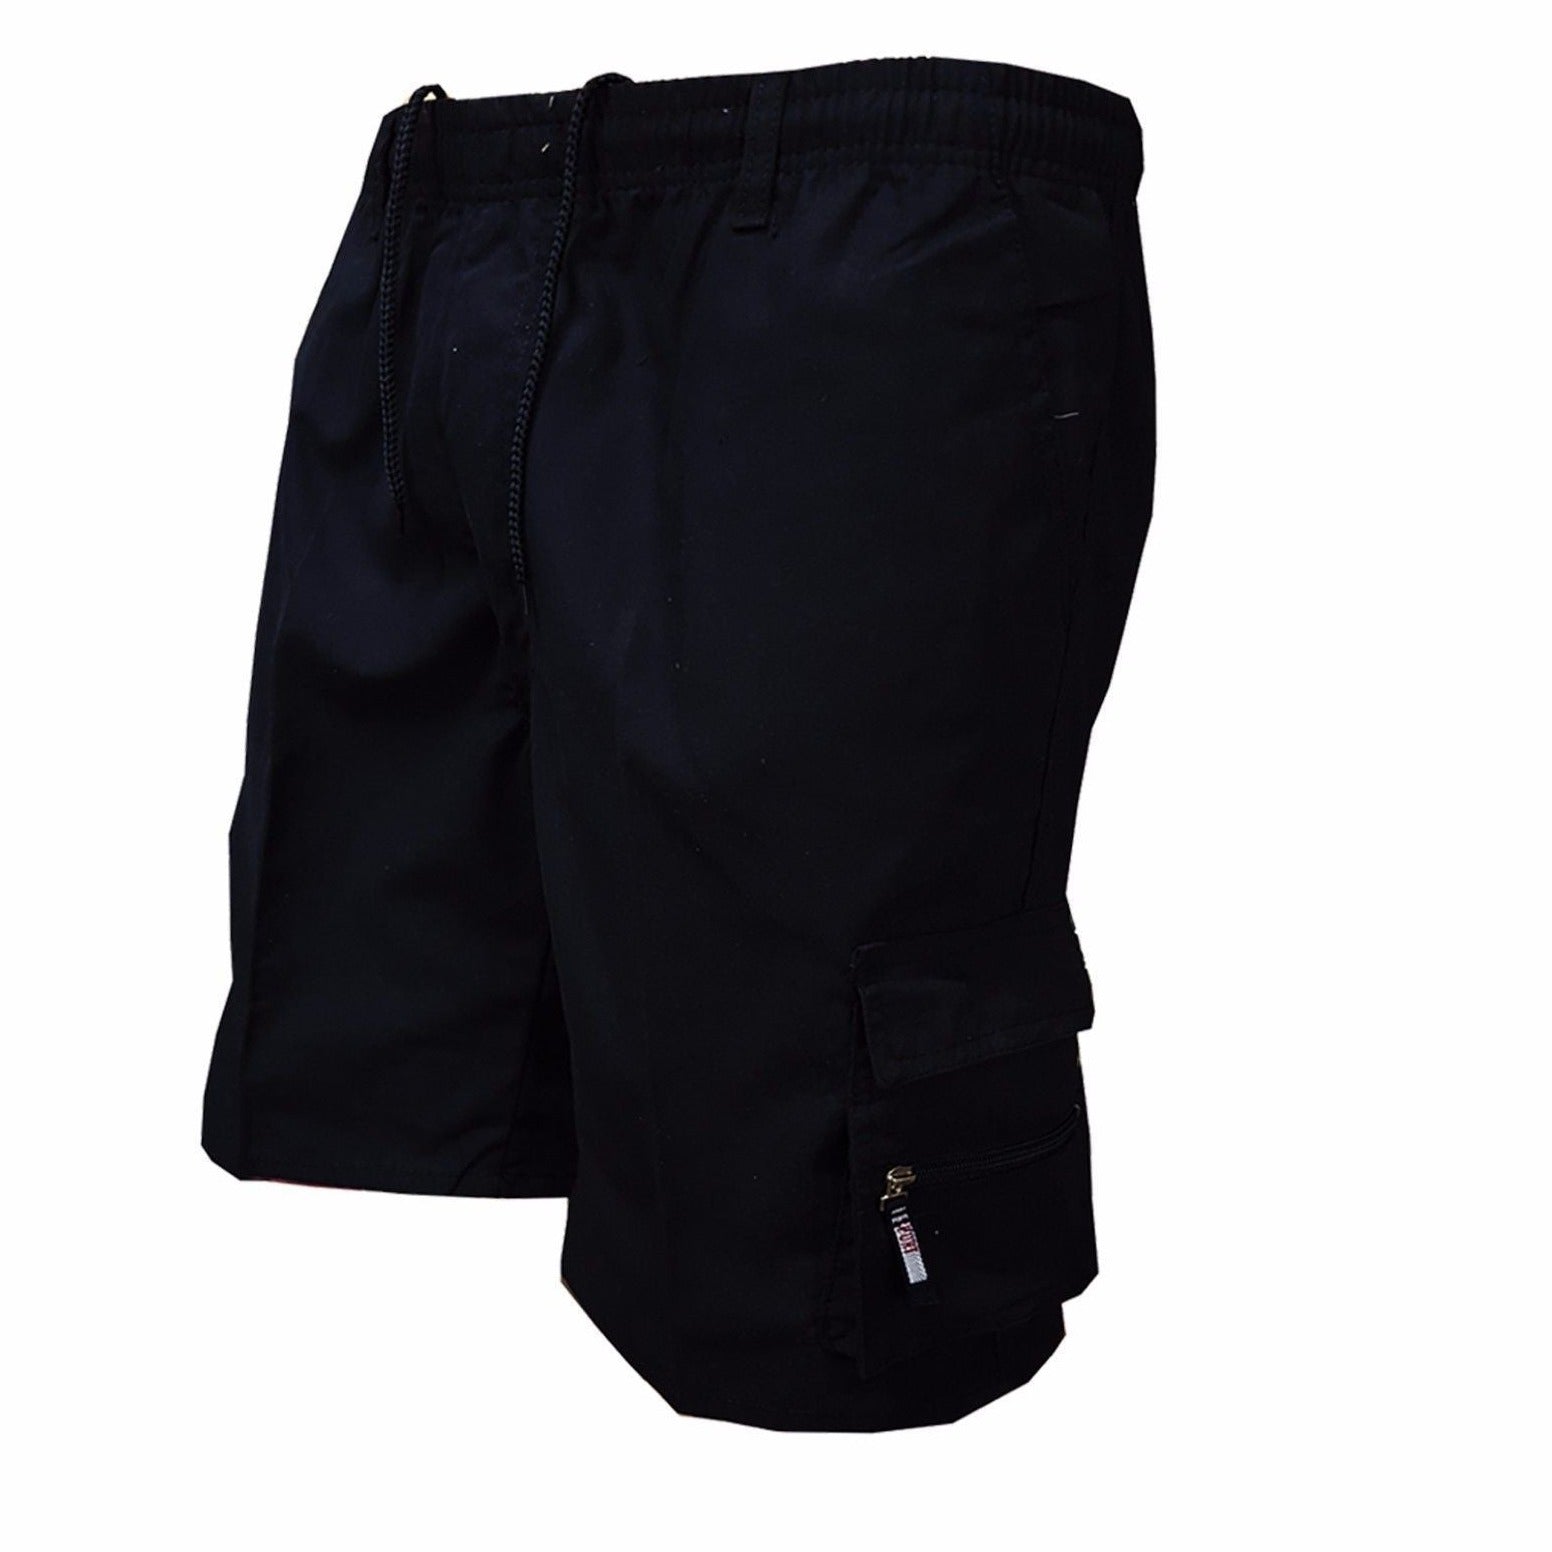  YKJATS Men's Shorts Workwear Shorts Loose Casual Pants  Multi-Pocket Jogging Shorts Cargo Biking Shorts for Men with Pockets Sports  Shorts (Medium, Beige) : Sports & Outdoors